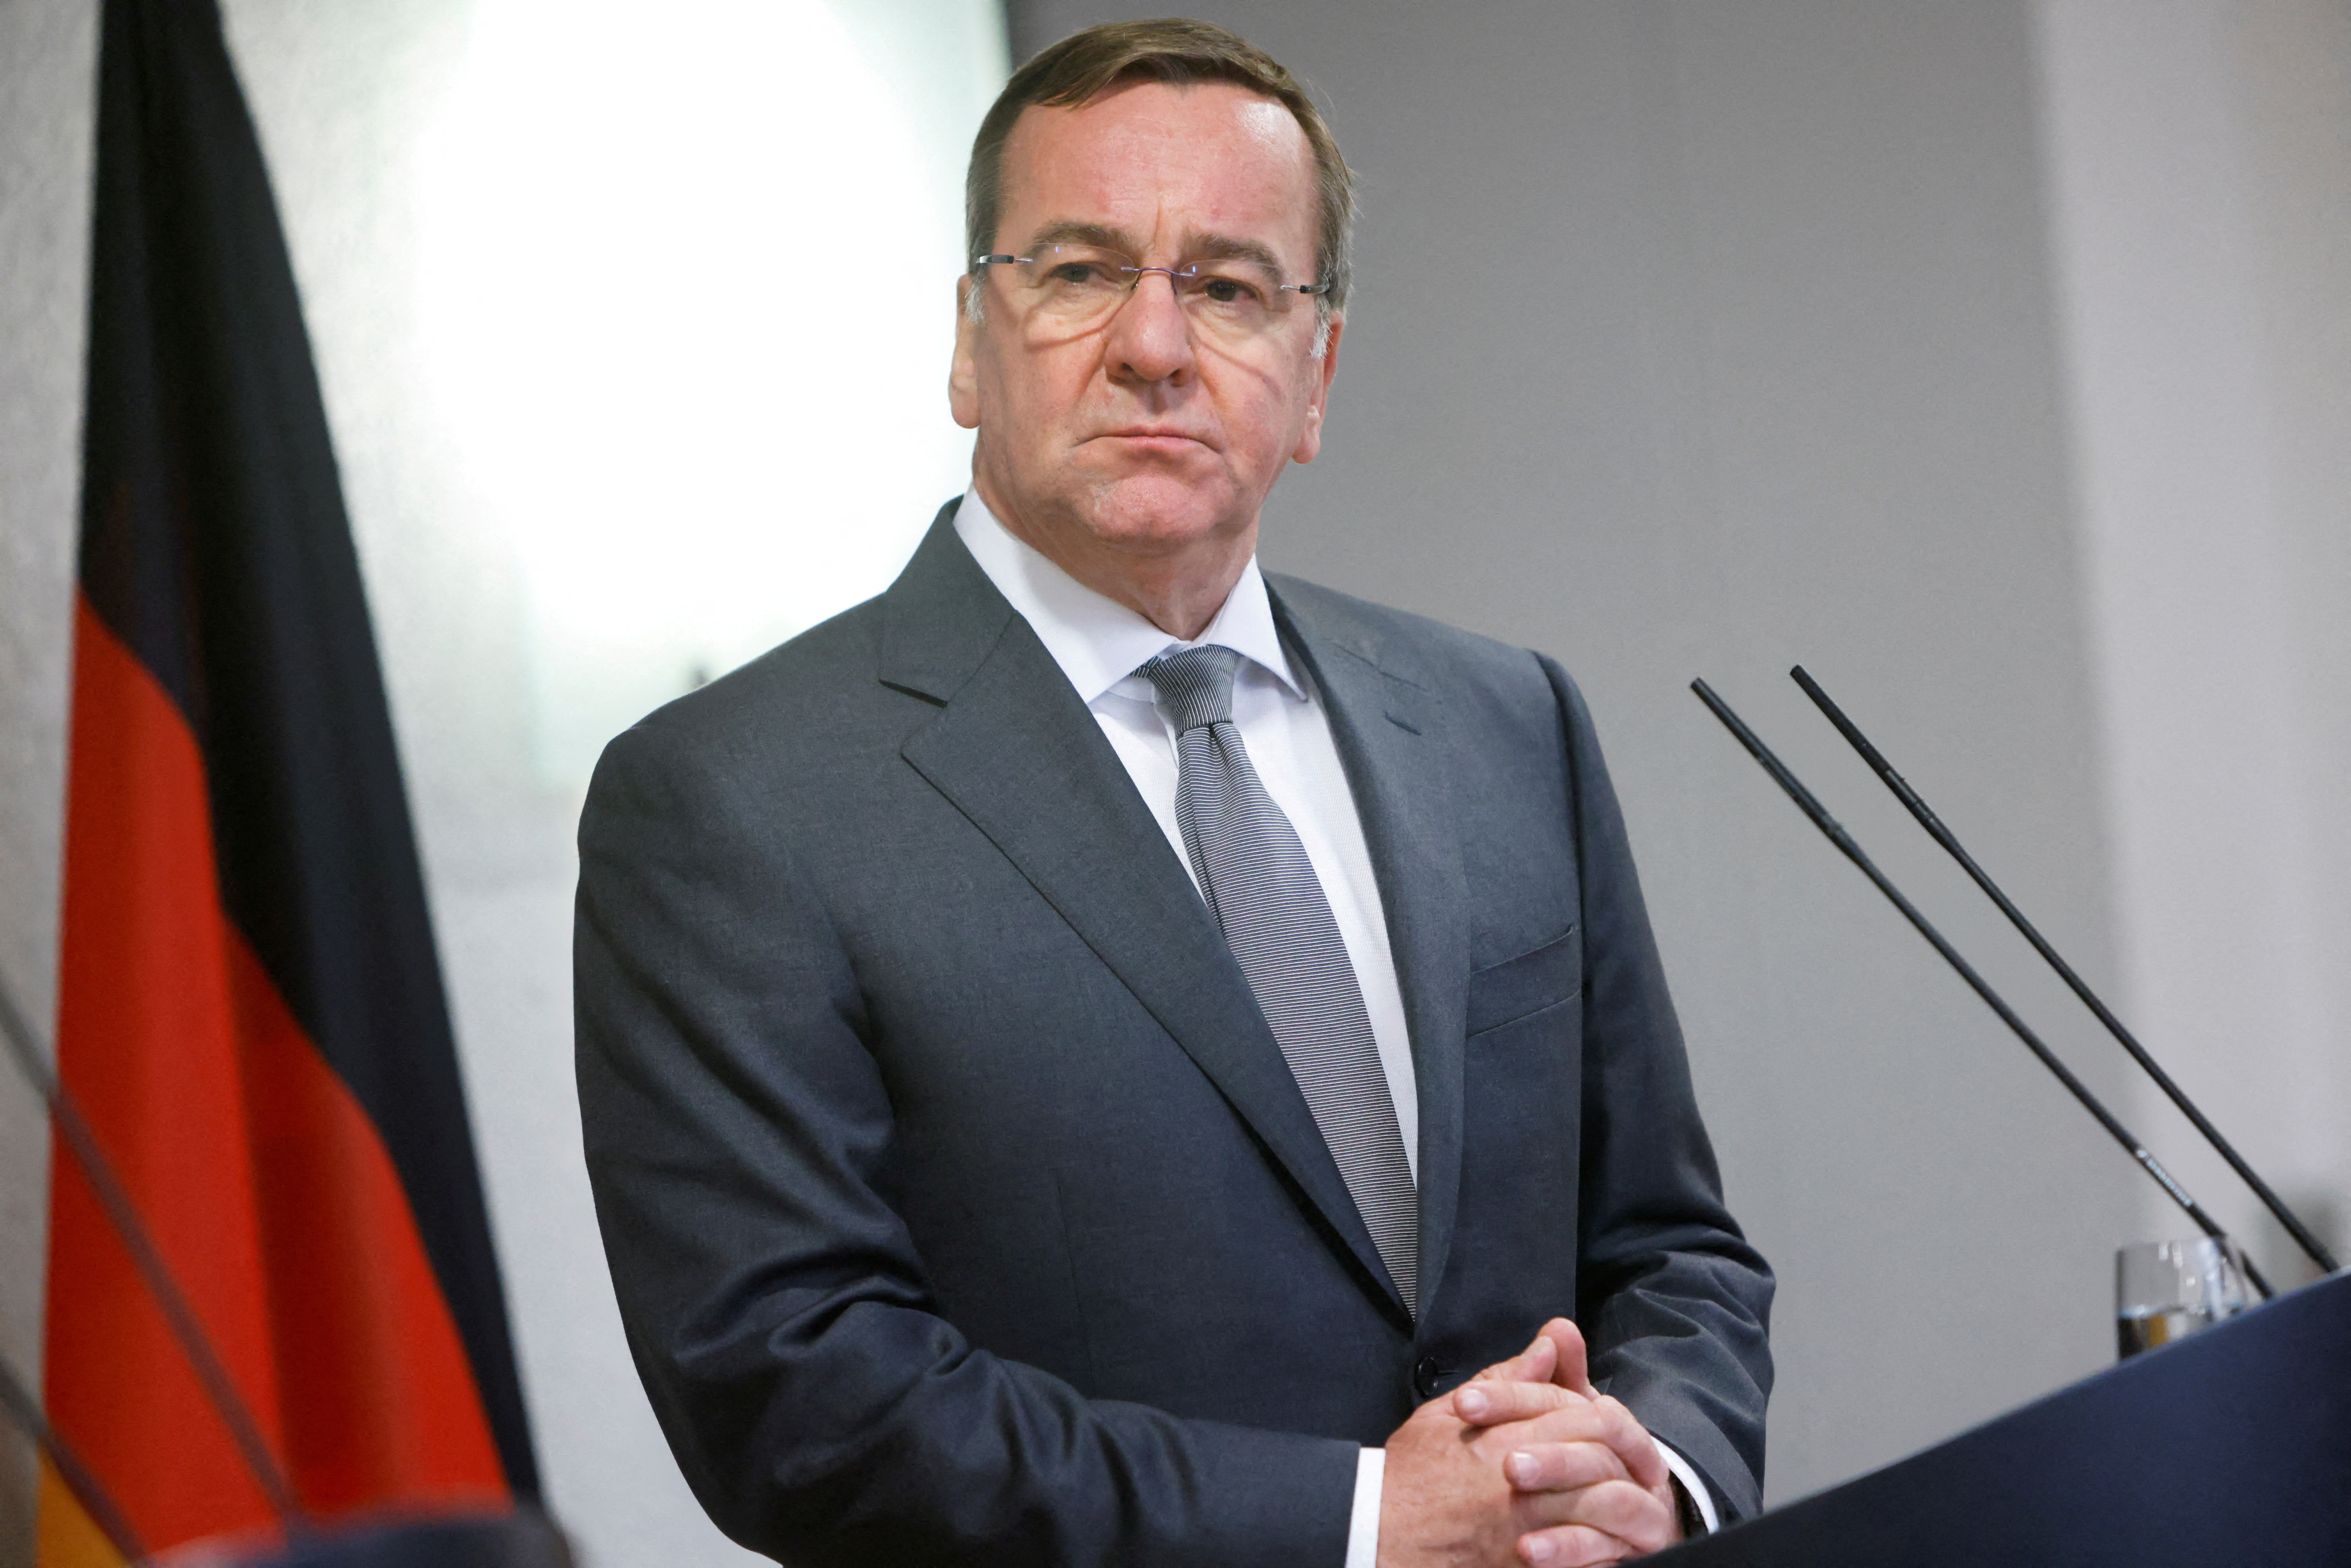 U.S. Defense Secretary Lloyd Austin visits Berlin